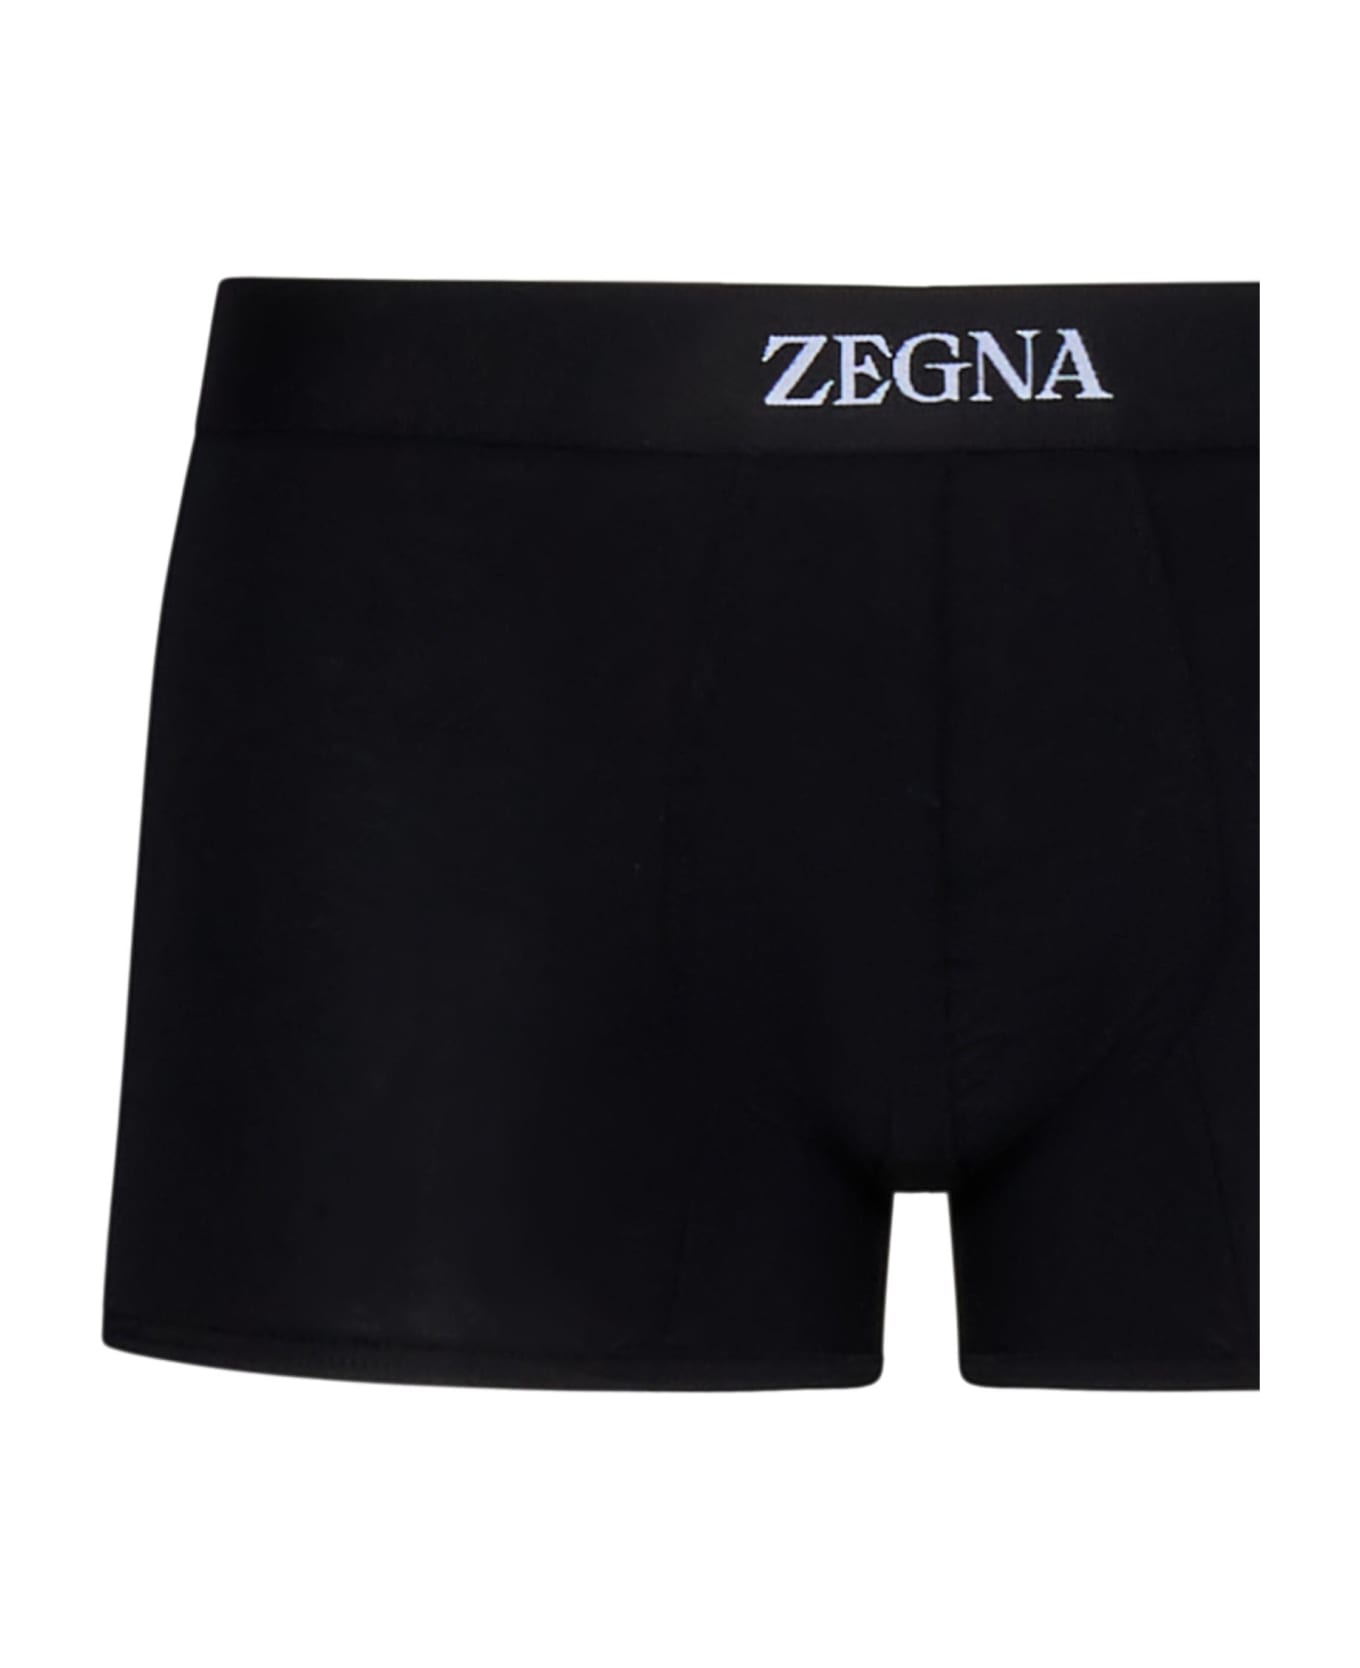 Zegna Boxer - Black